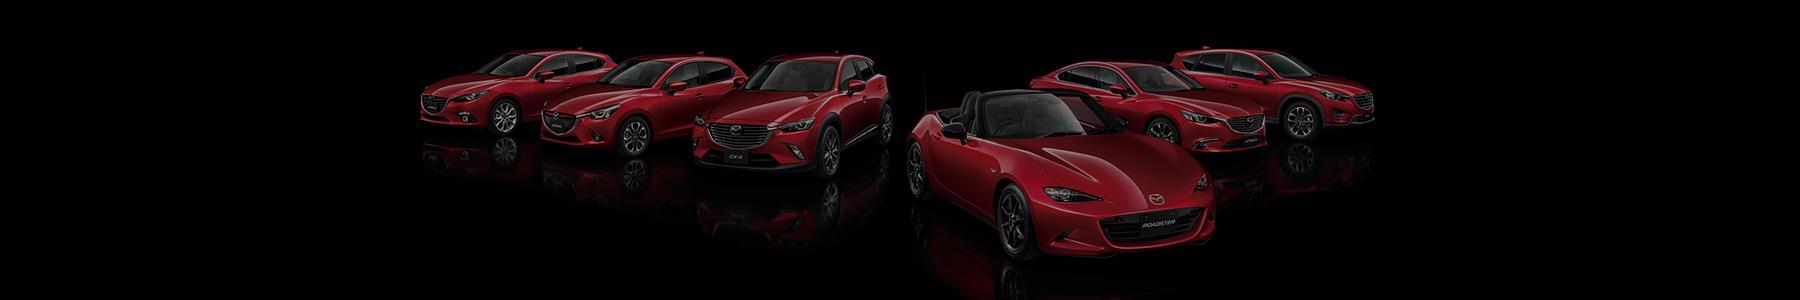 Mazda Models Awarded Car of the Year Japan